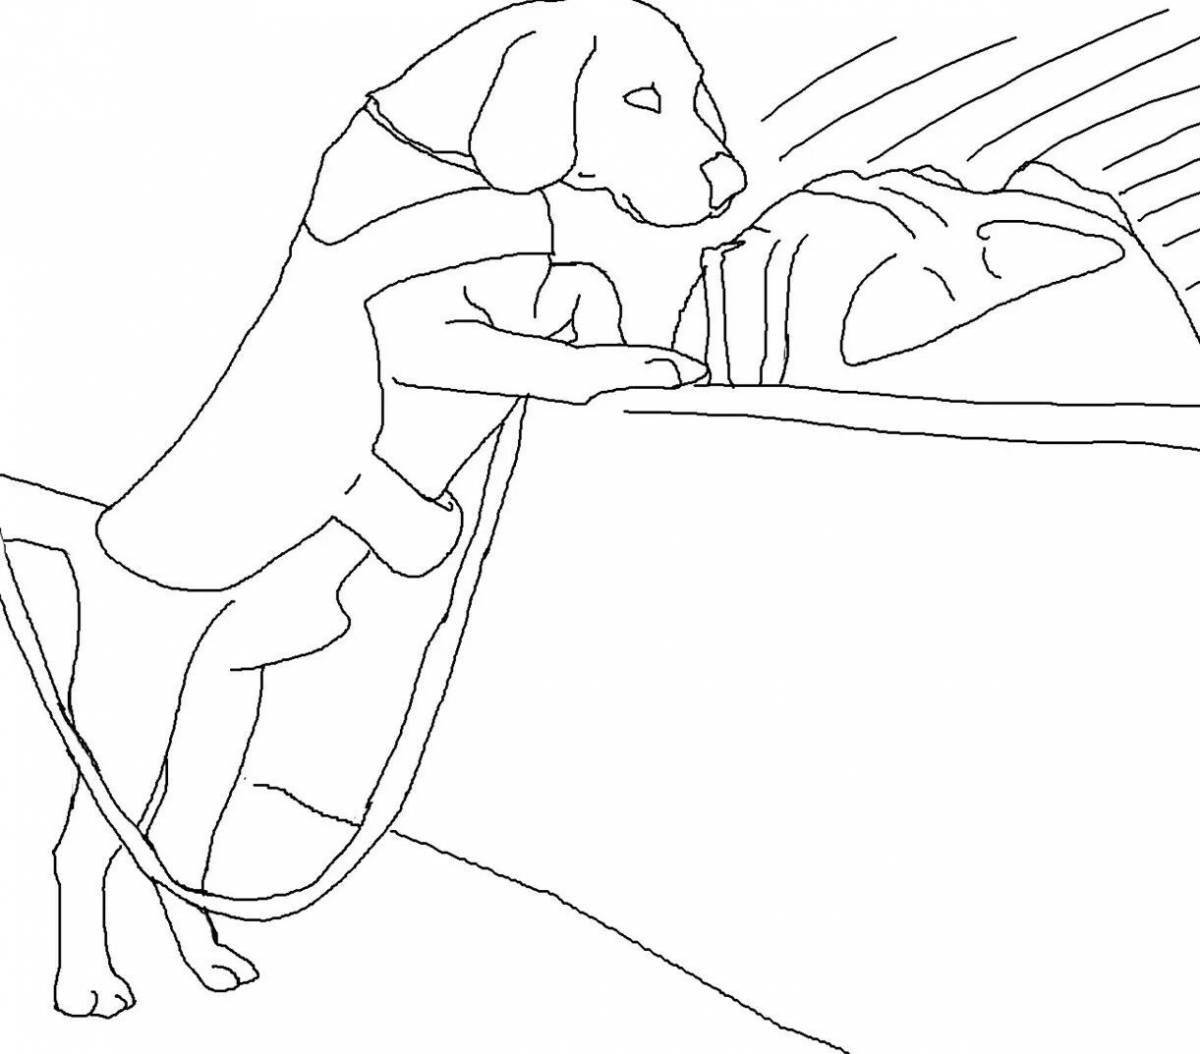 Bright beagle coloring page